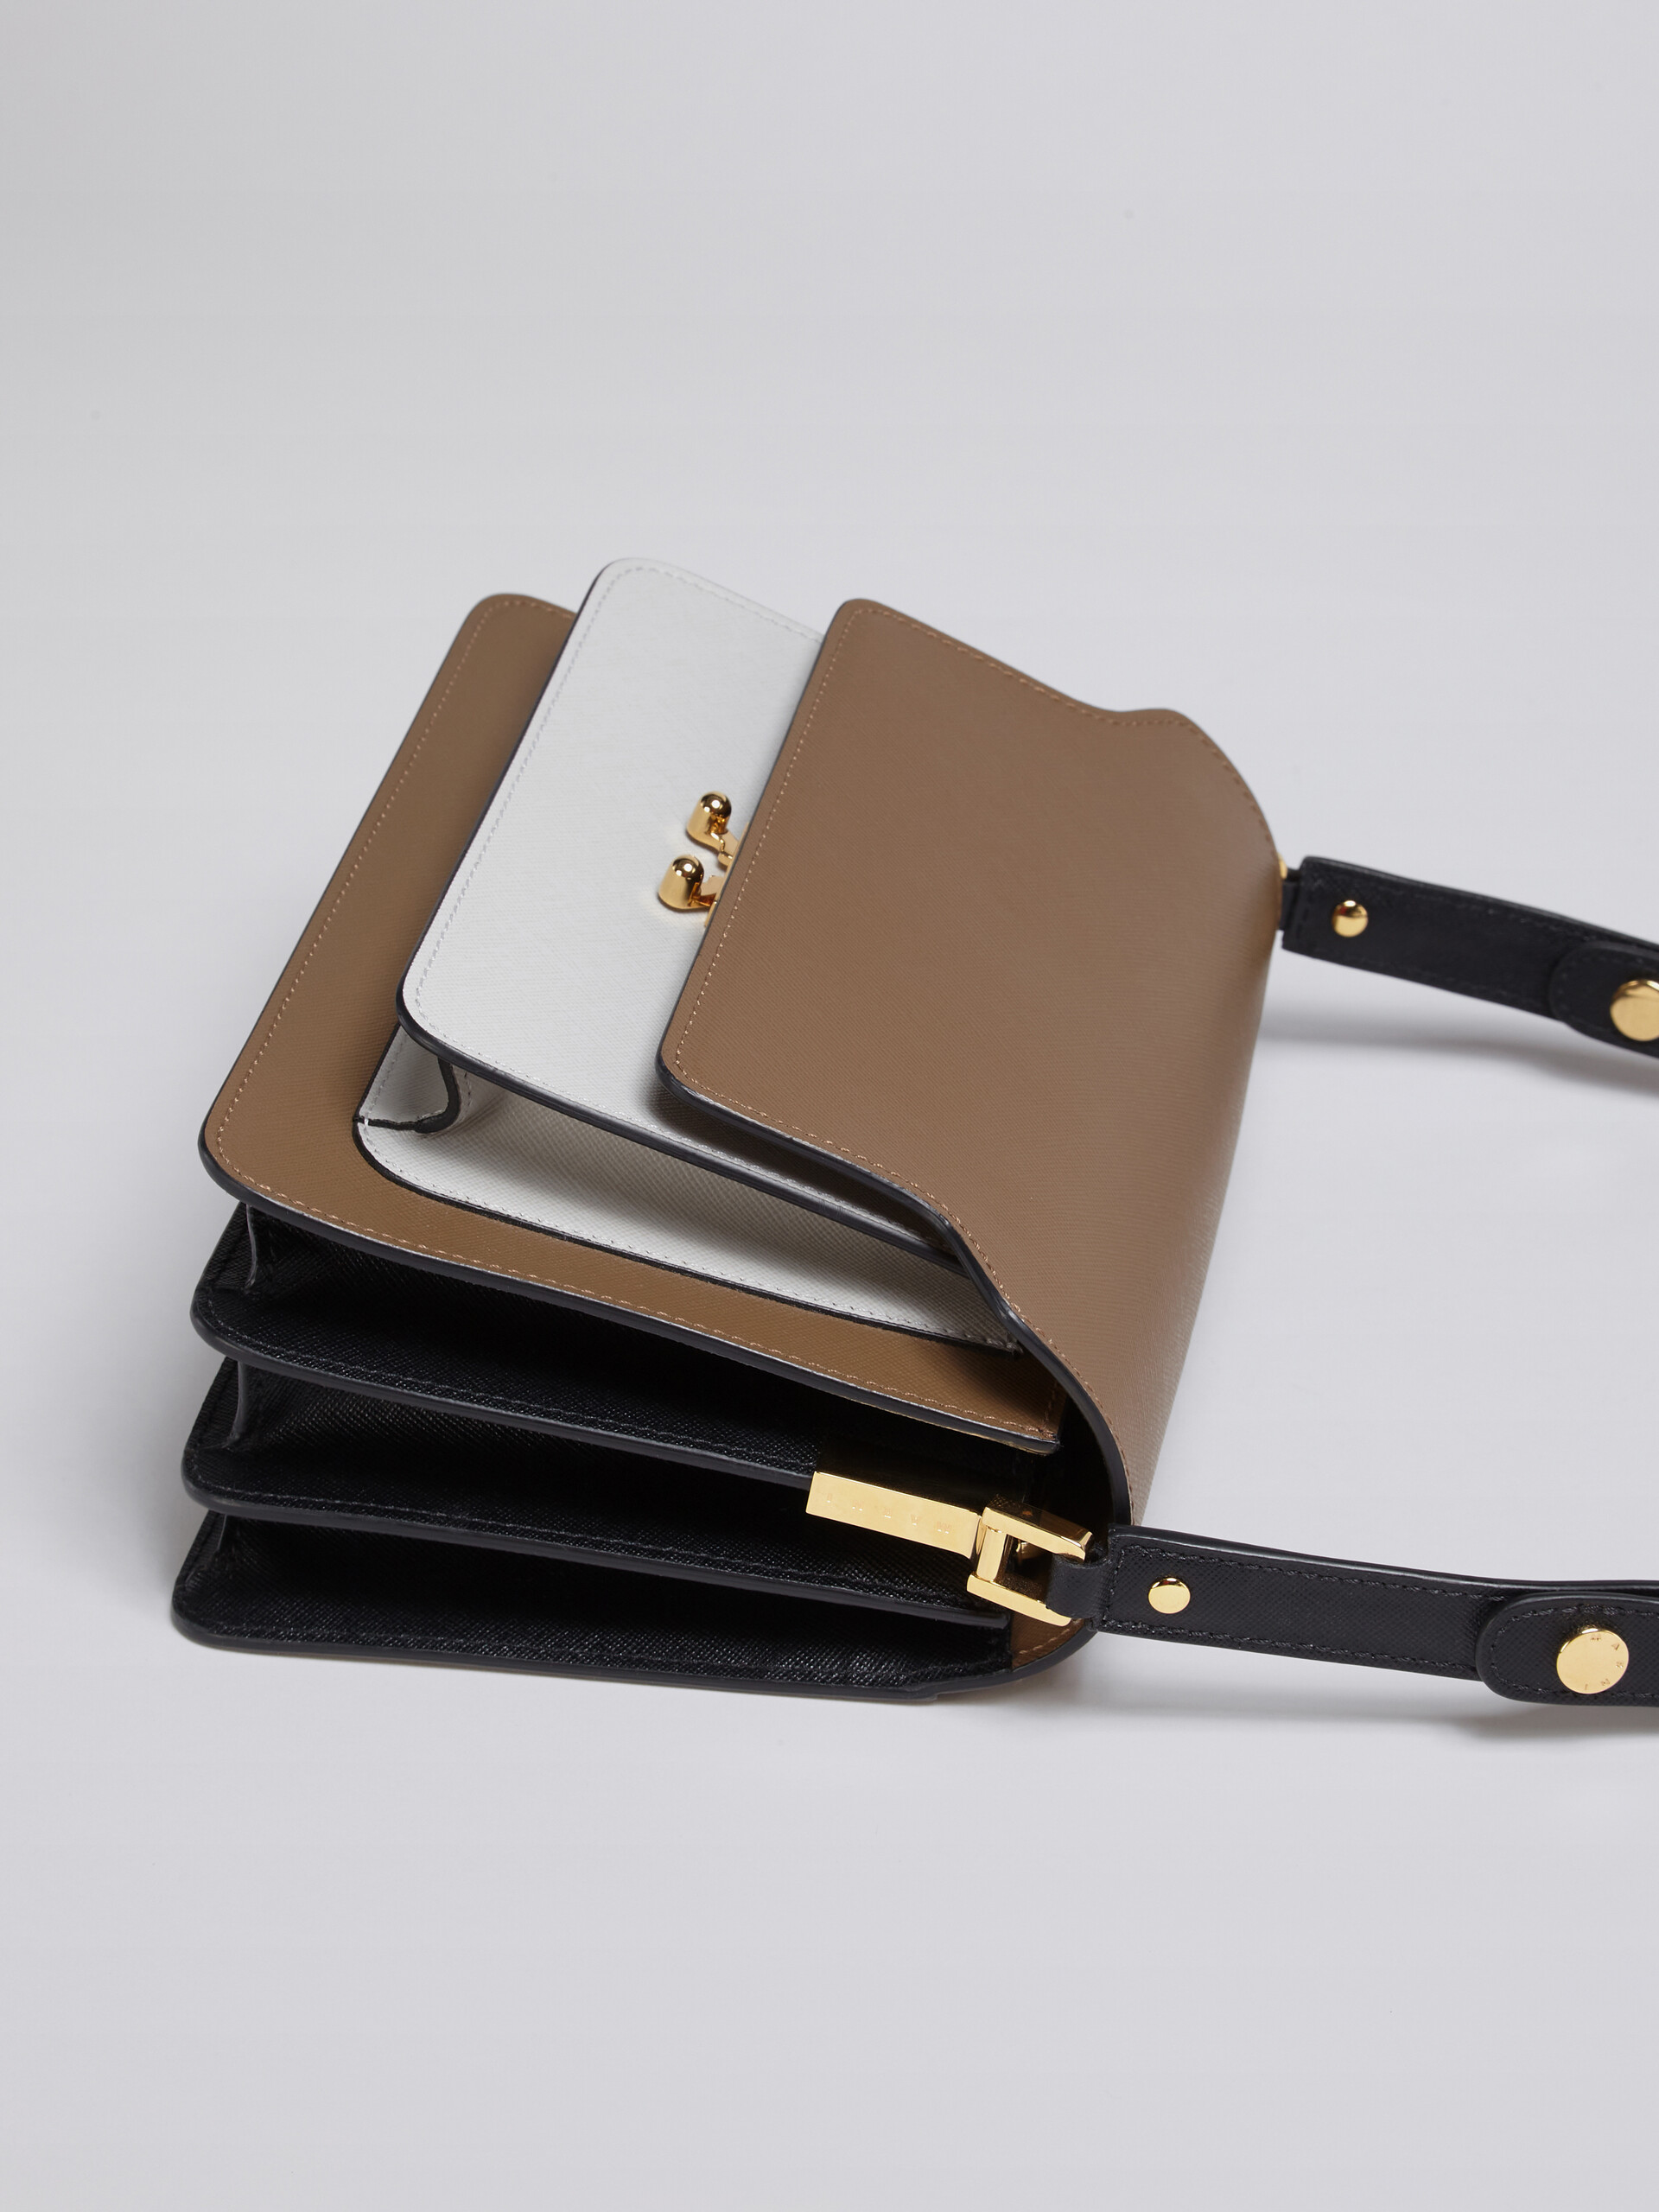 TRUNK medium bag in brown grey and black saffiano leather - Shoulder Bag - Image 4